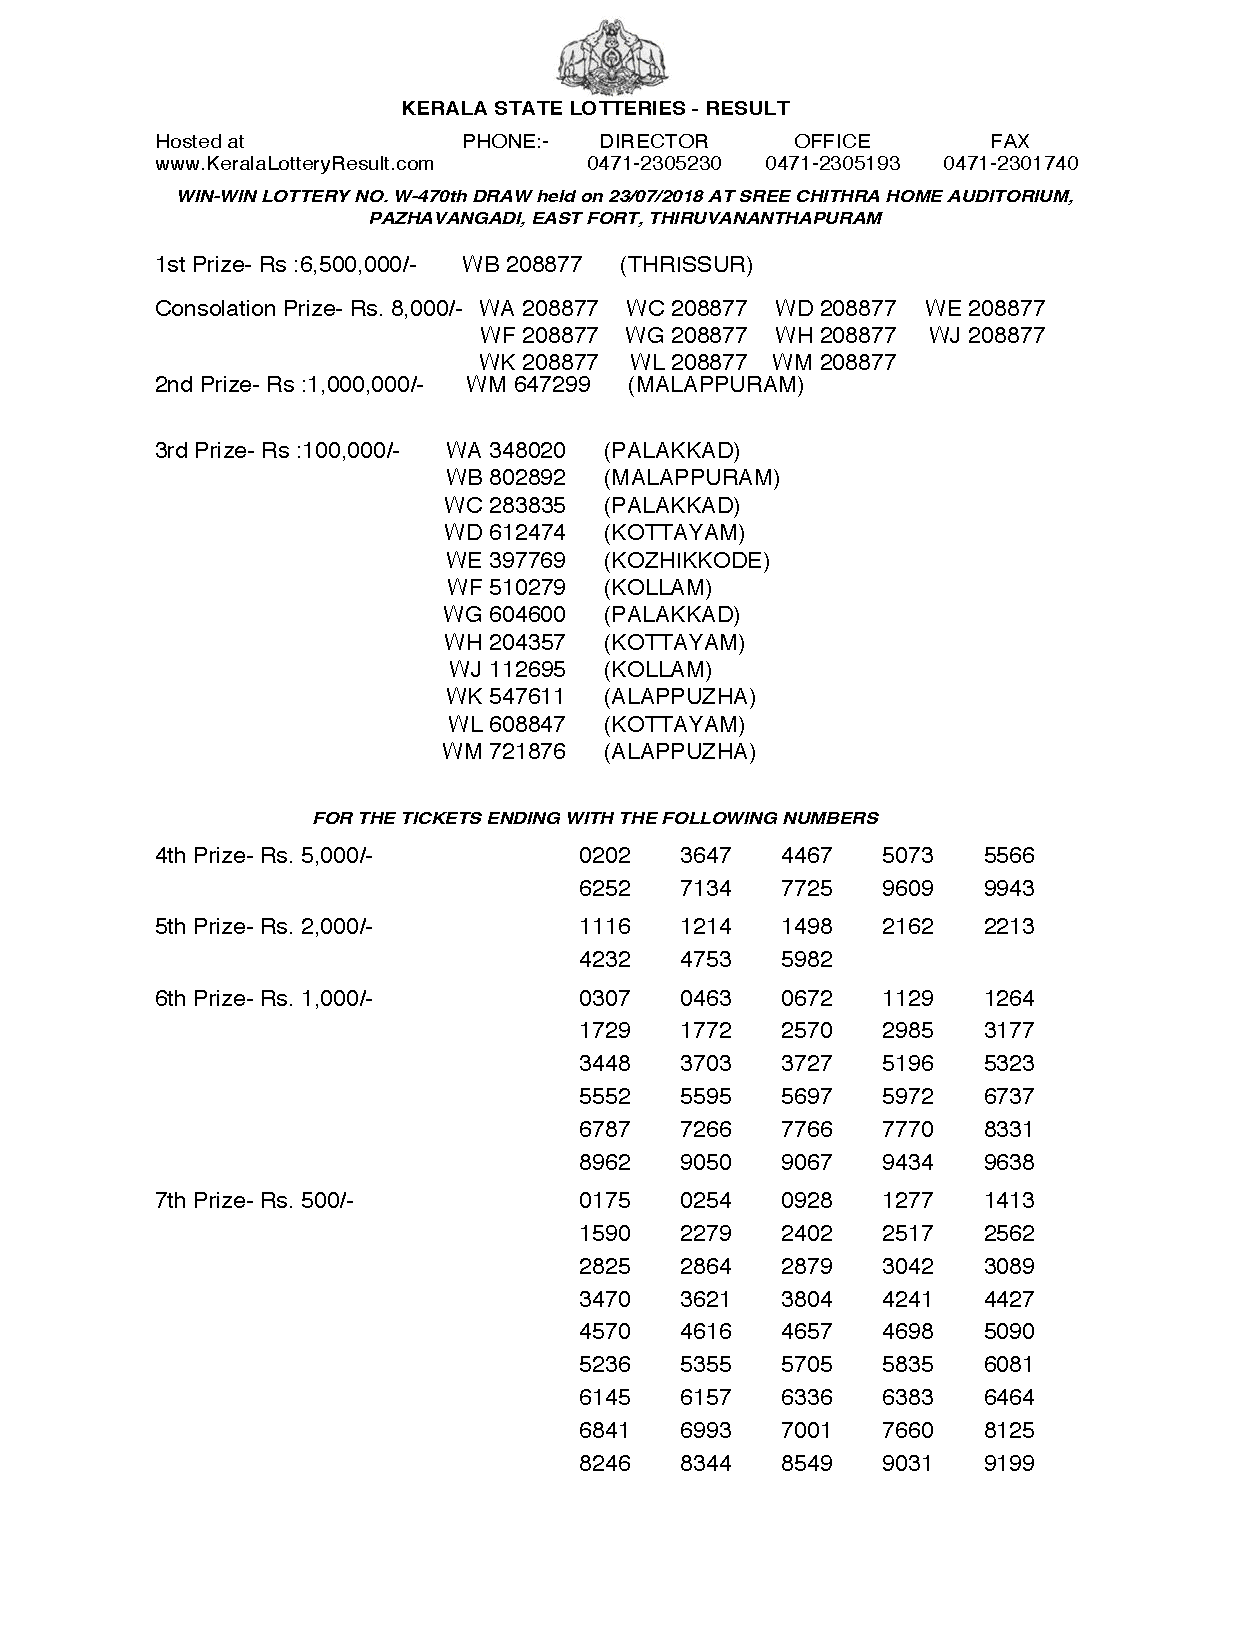 Winwin W470 Kerala Lottery Results Screenshot: Page 1